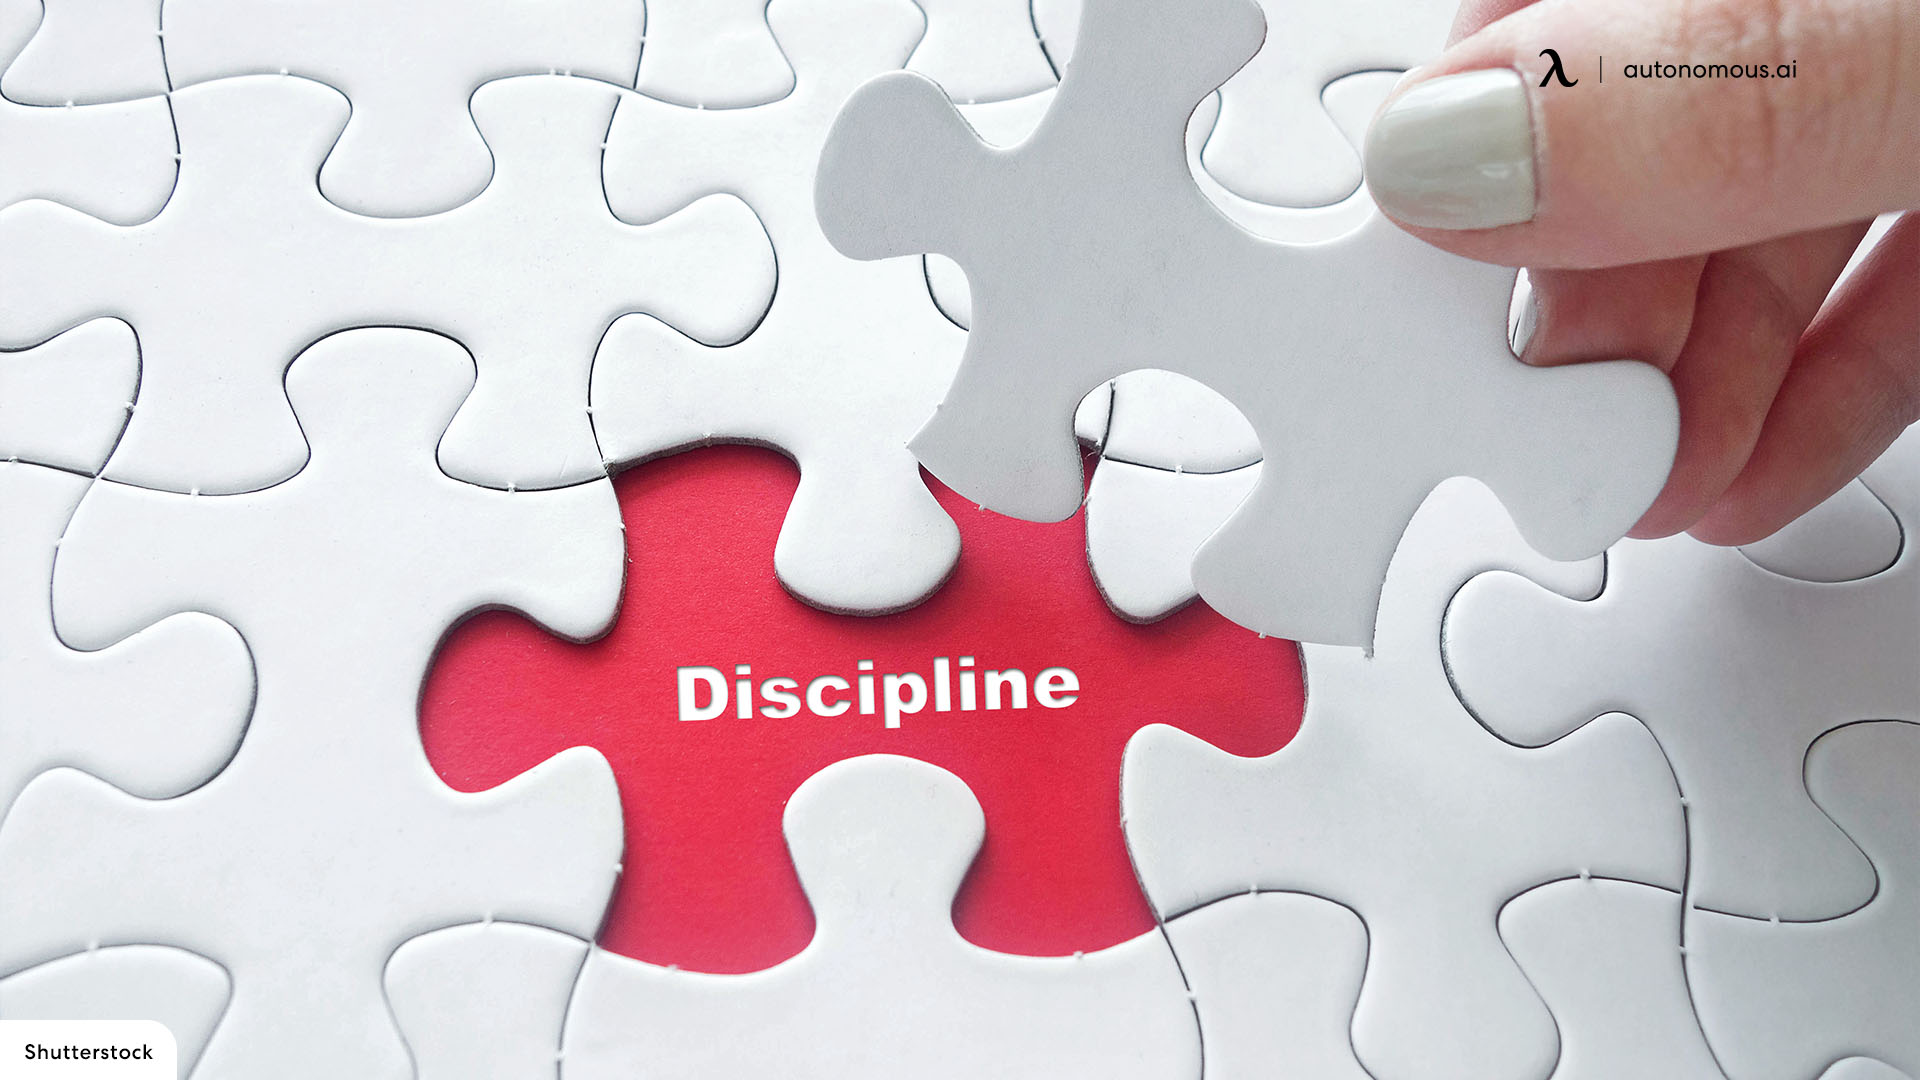 Discipline Good habits at work